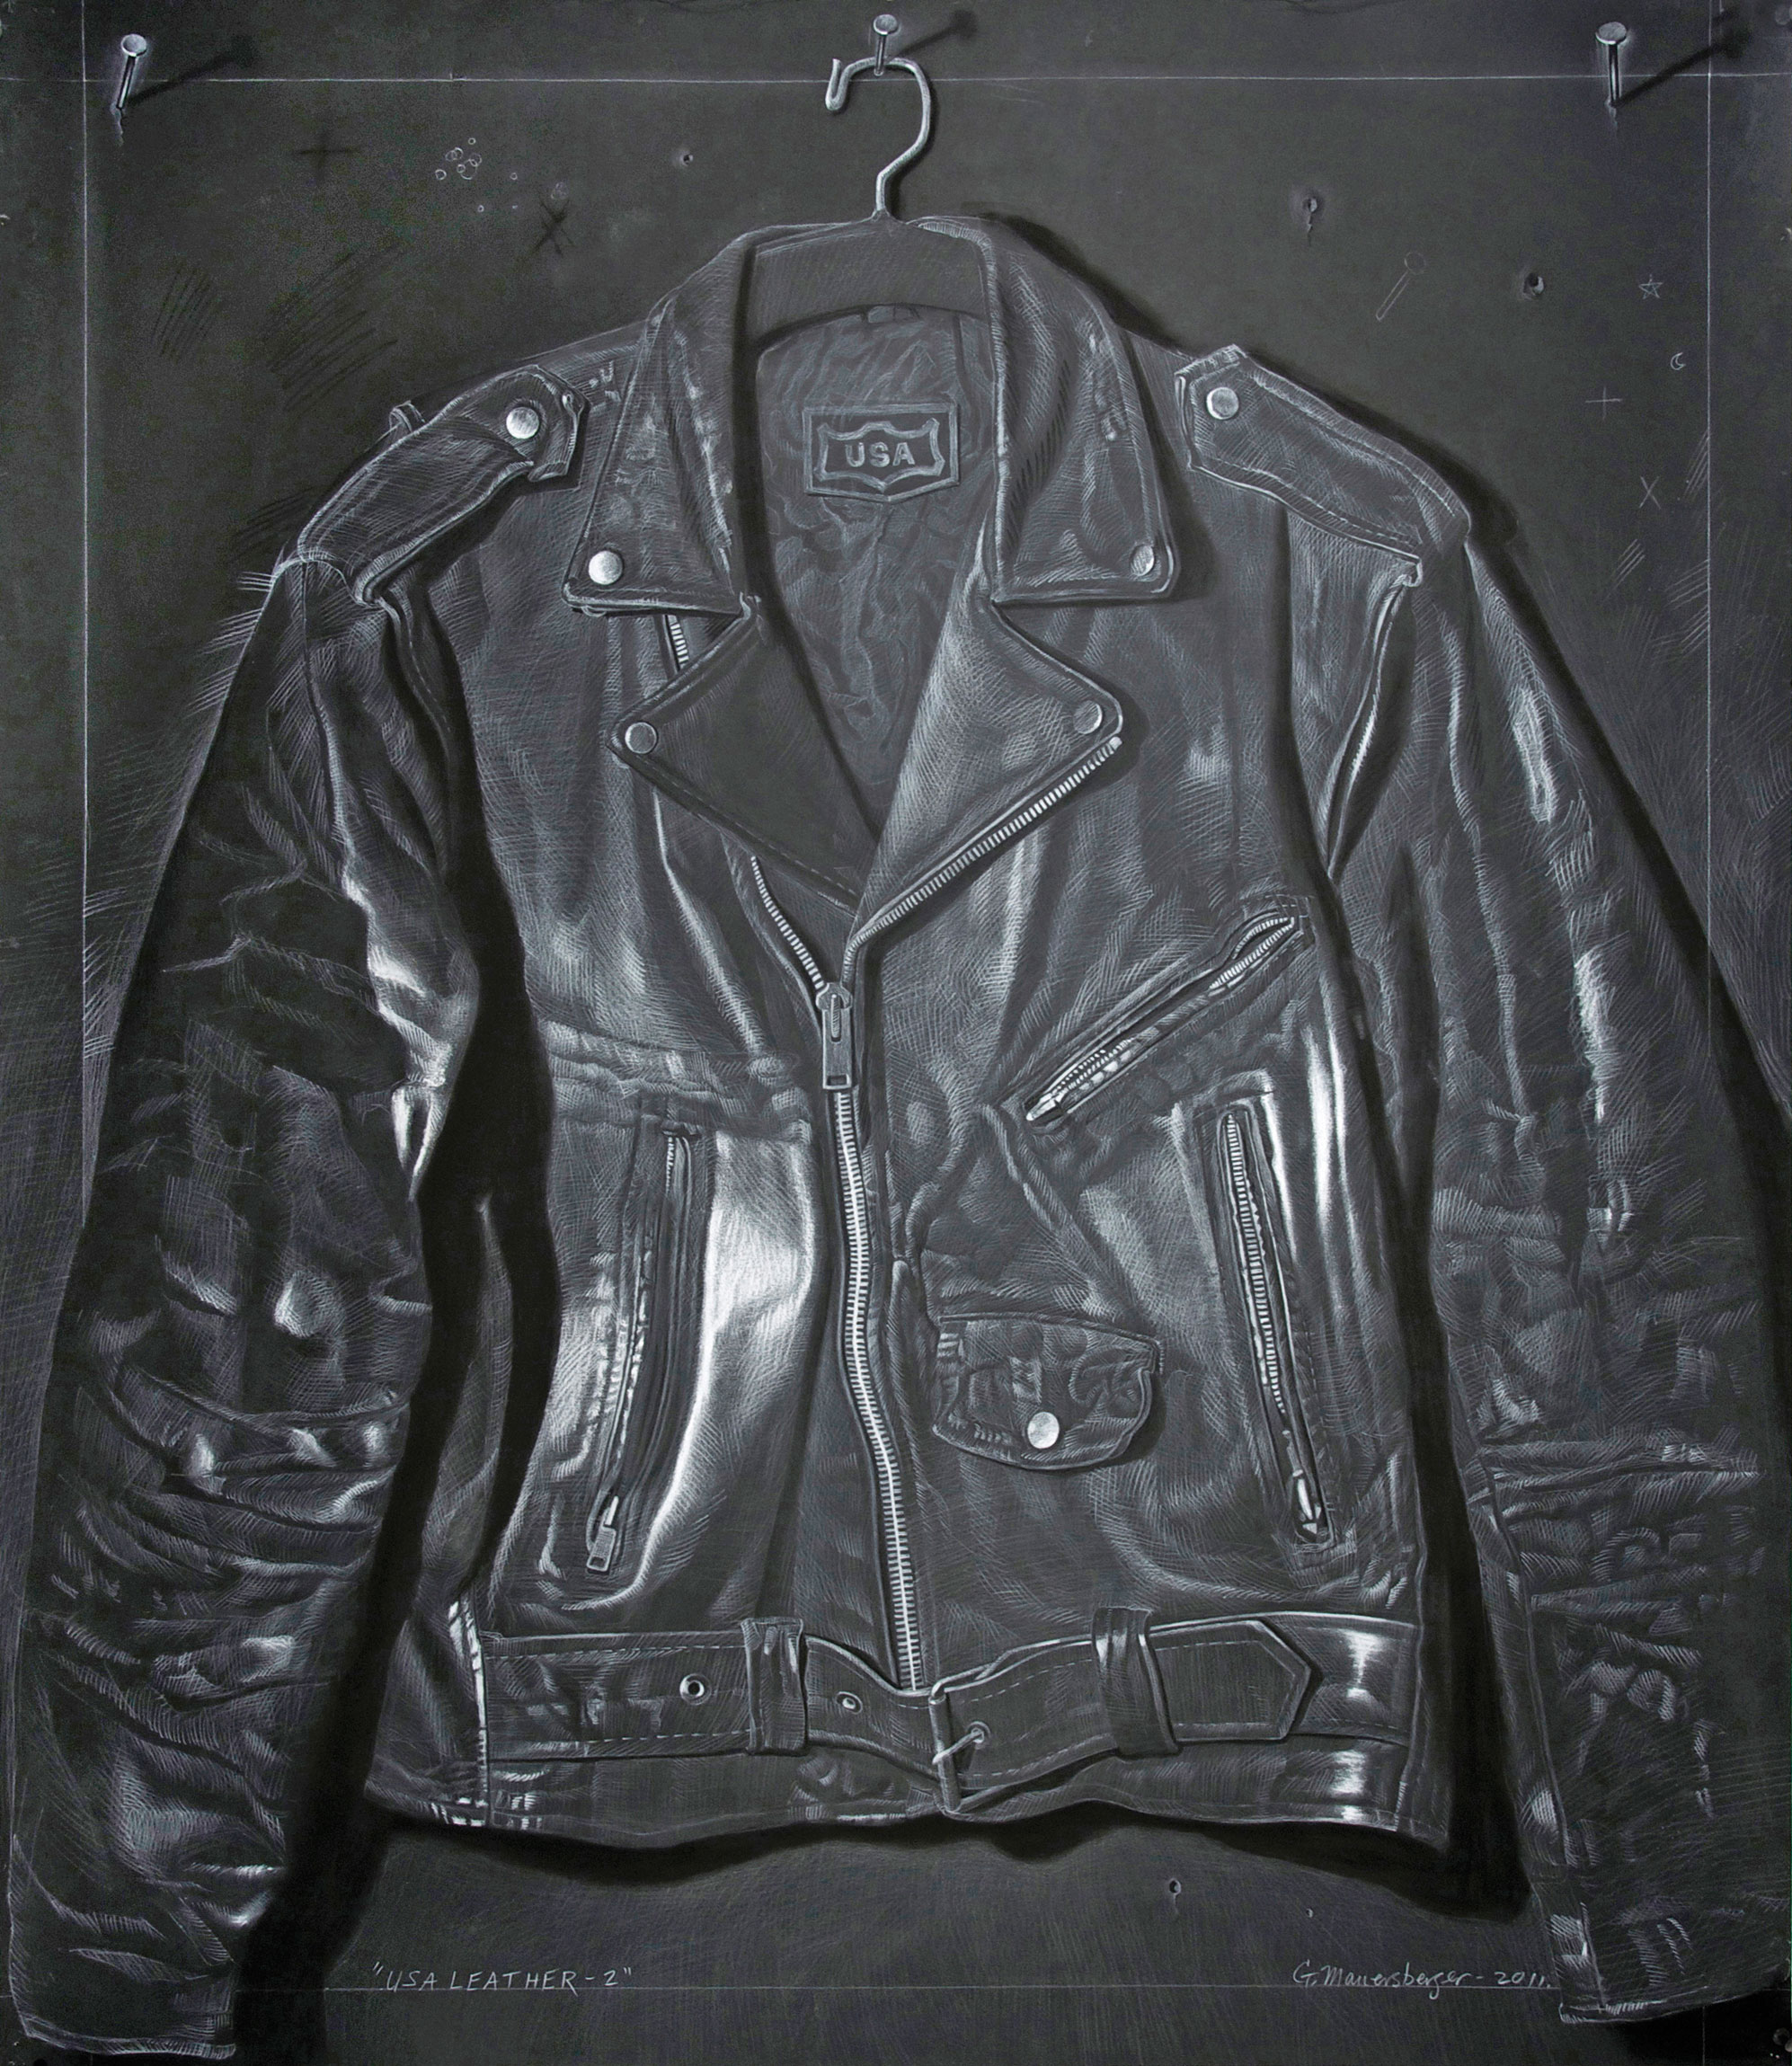 USA Leather 2